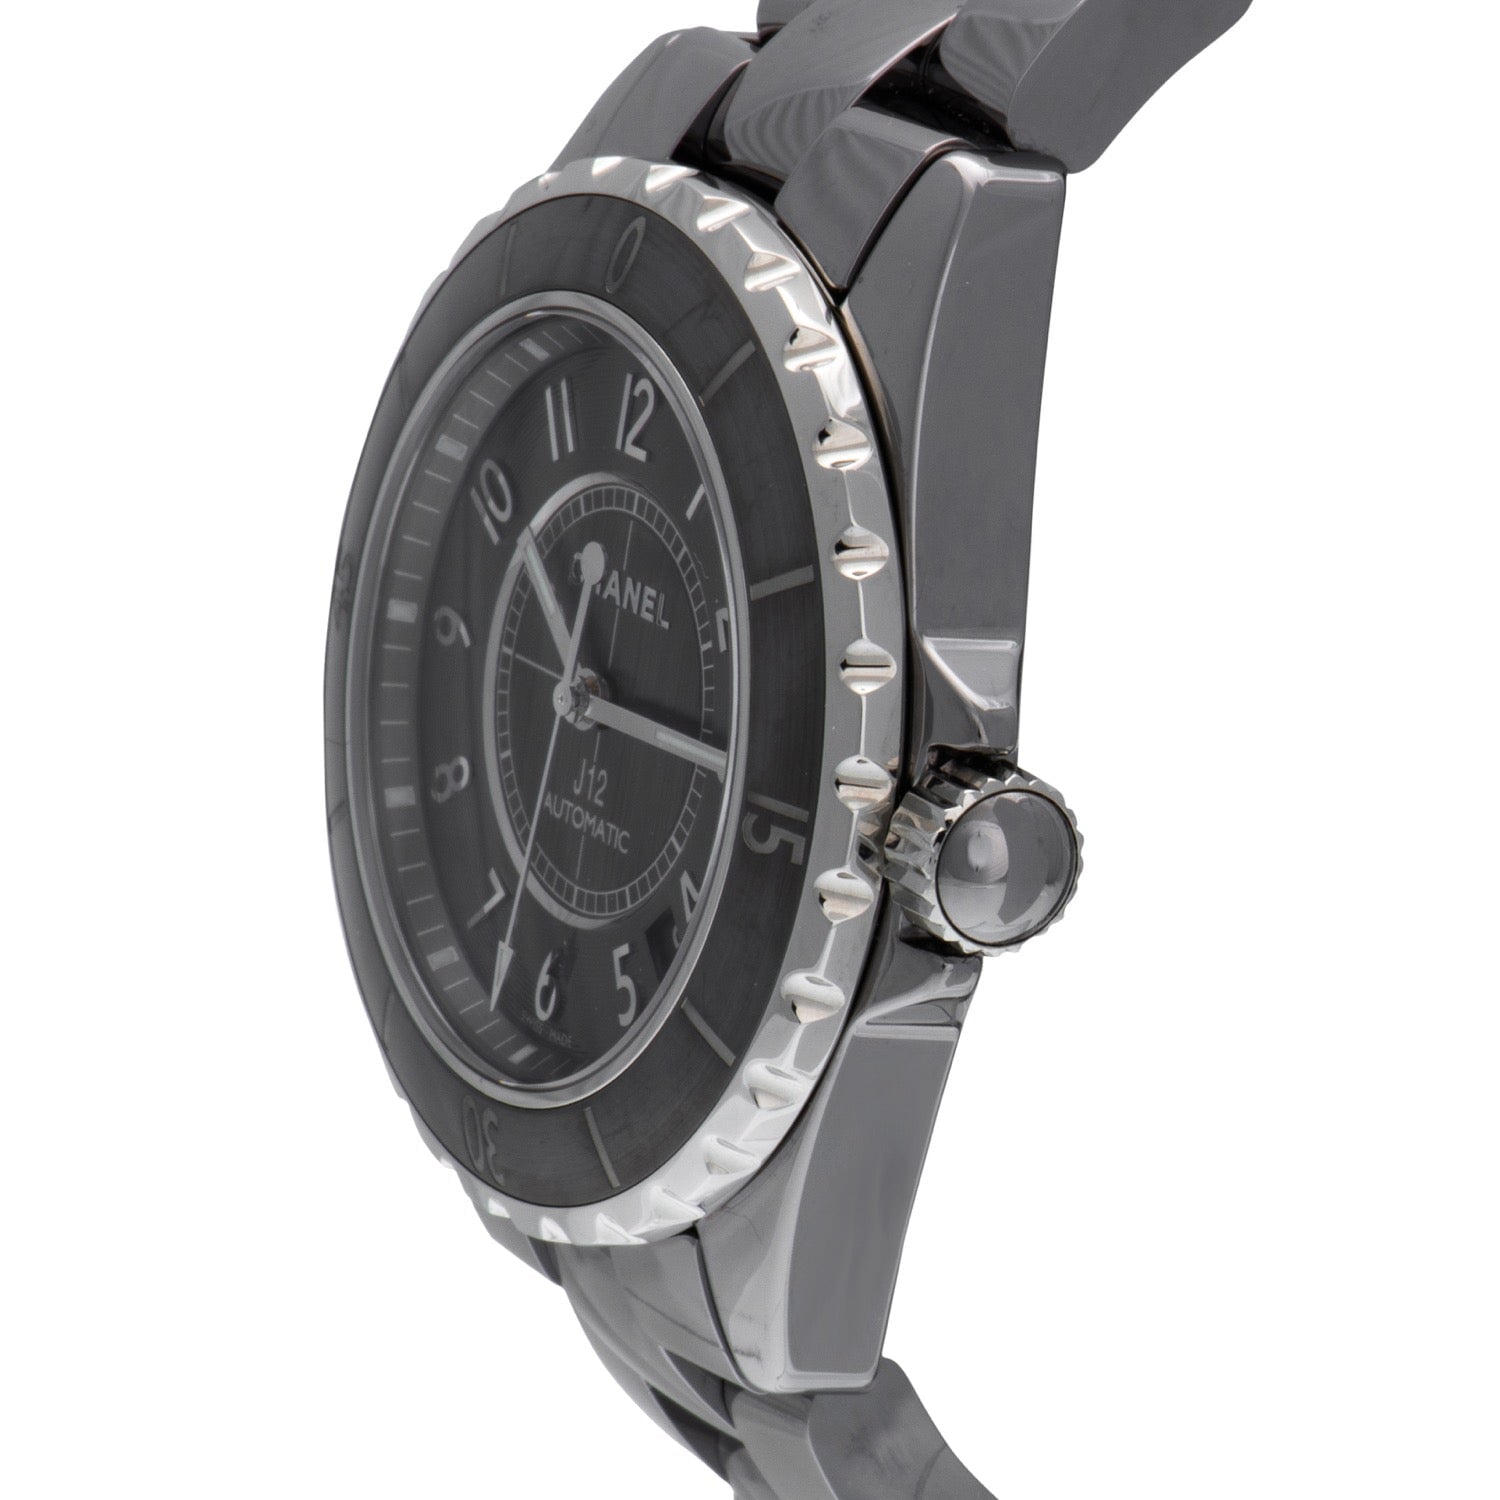 Chanel J12 Chromatic Automatic Watch H2979